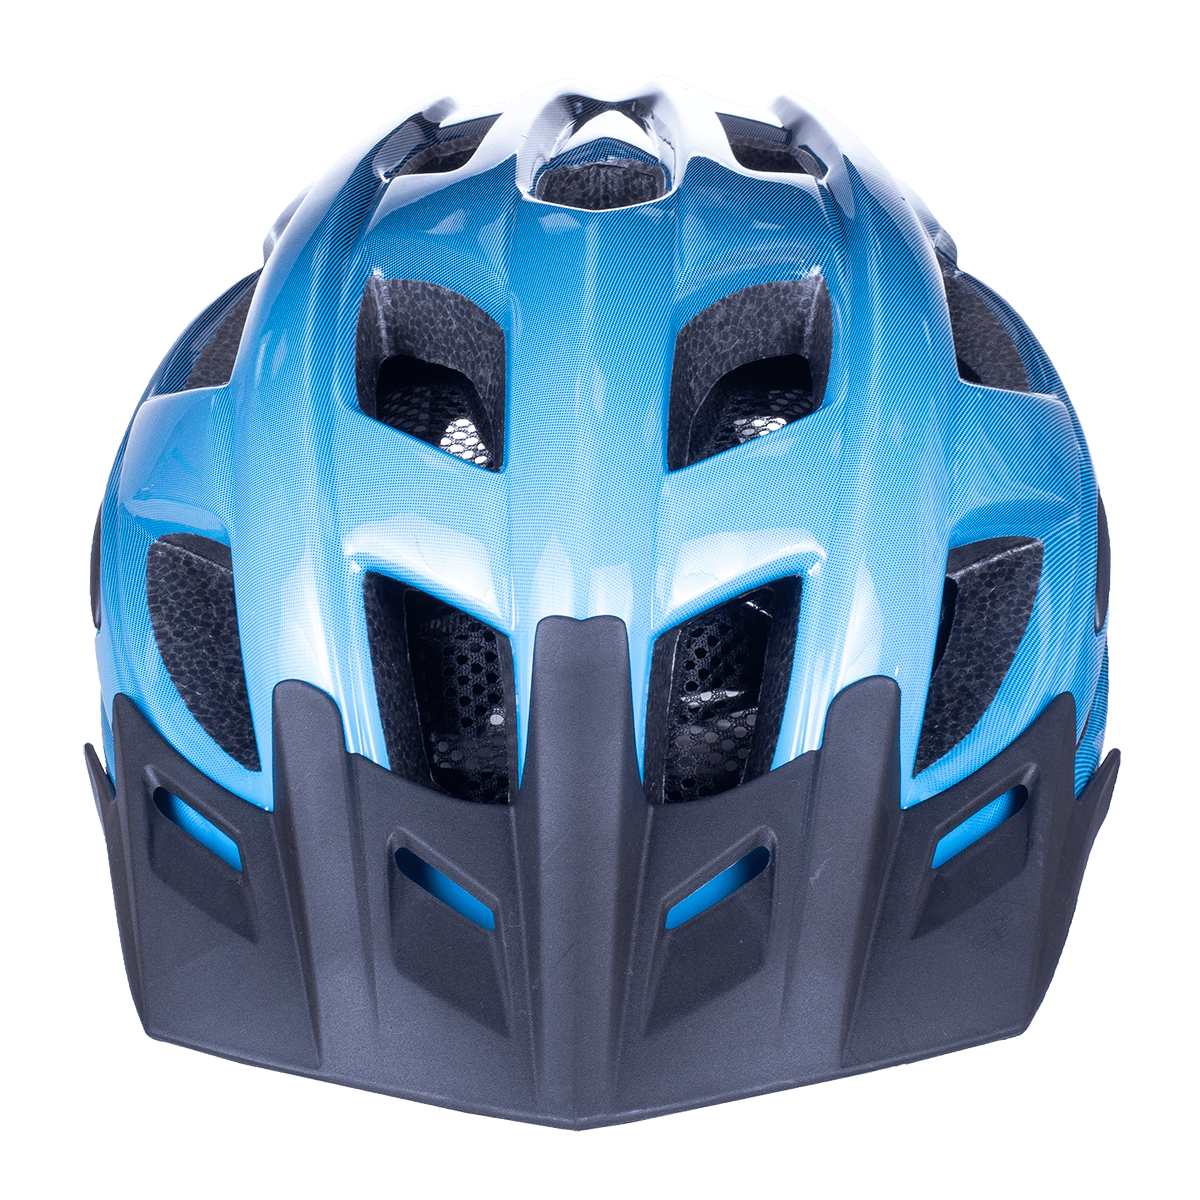 Helmet image number 3